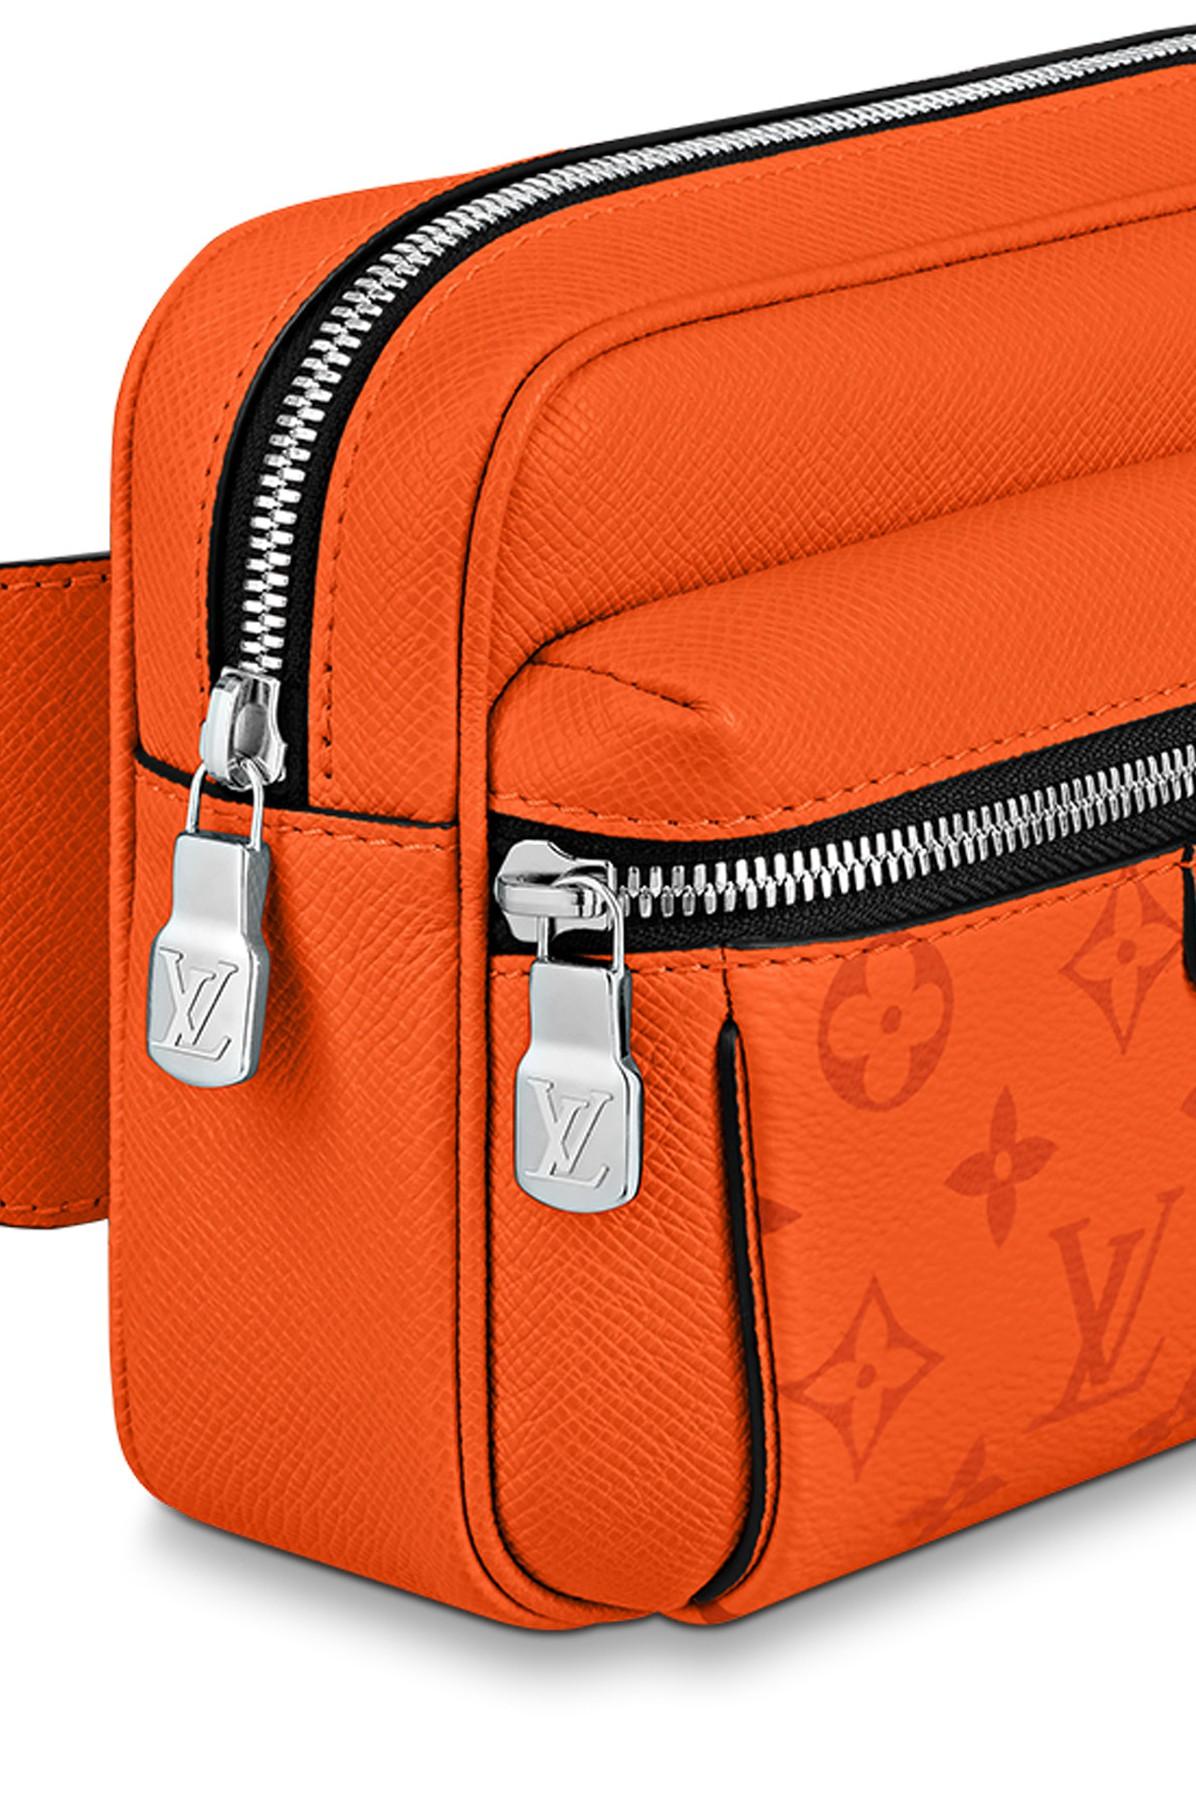 Pin by Char Holmansantana on acessorize  Luis vuitton bag Bags designer  fashion Louis vuitton luggage